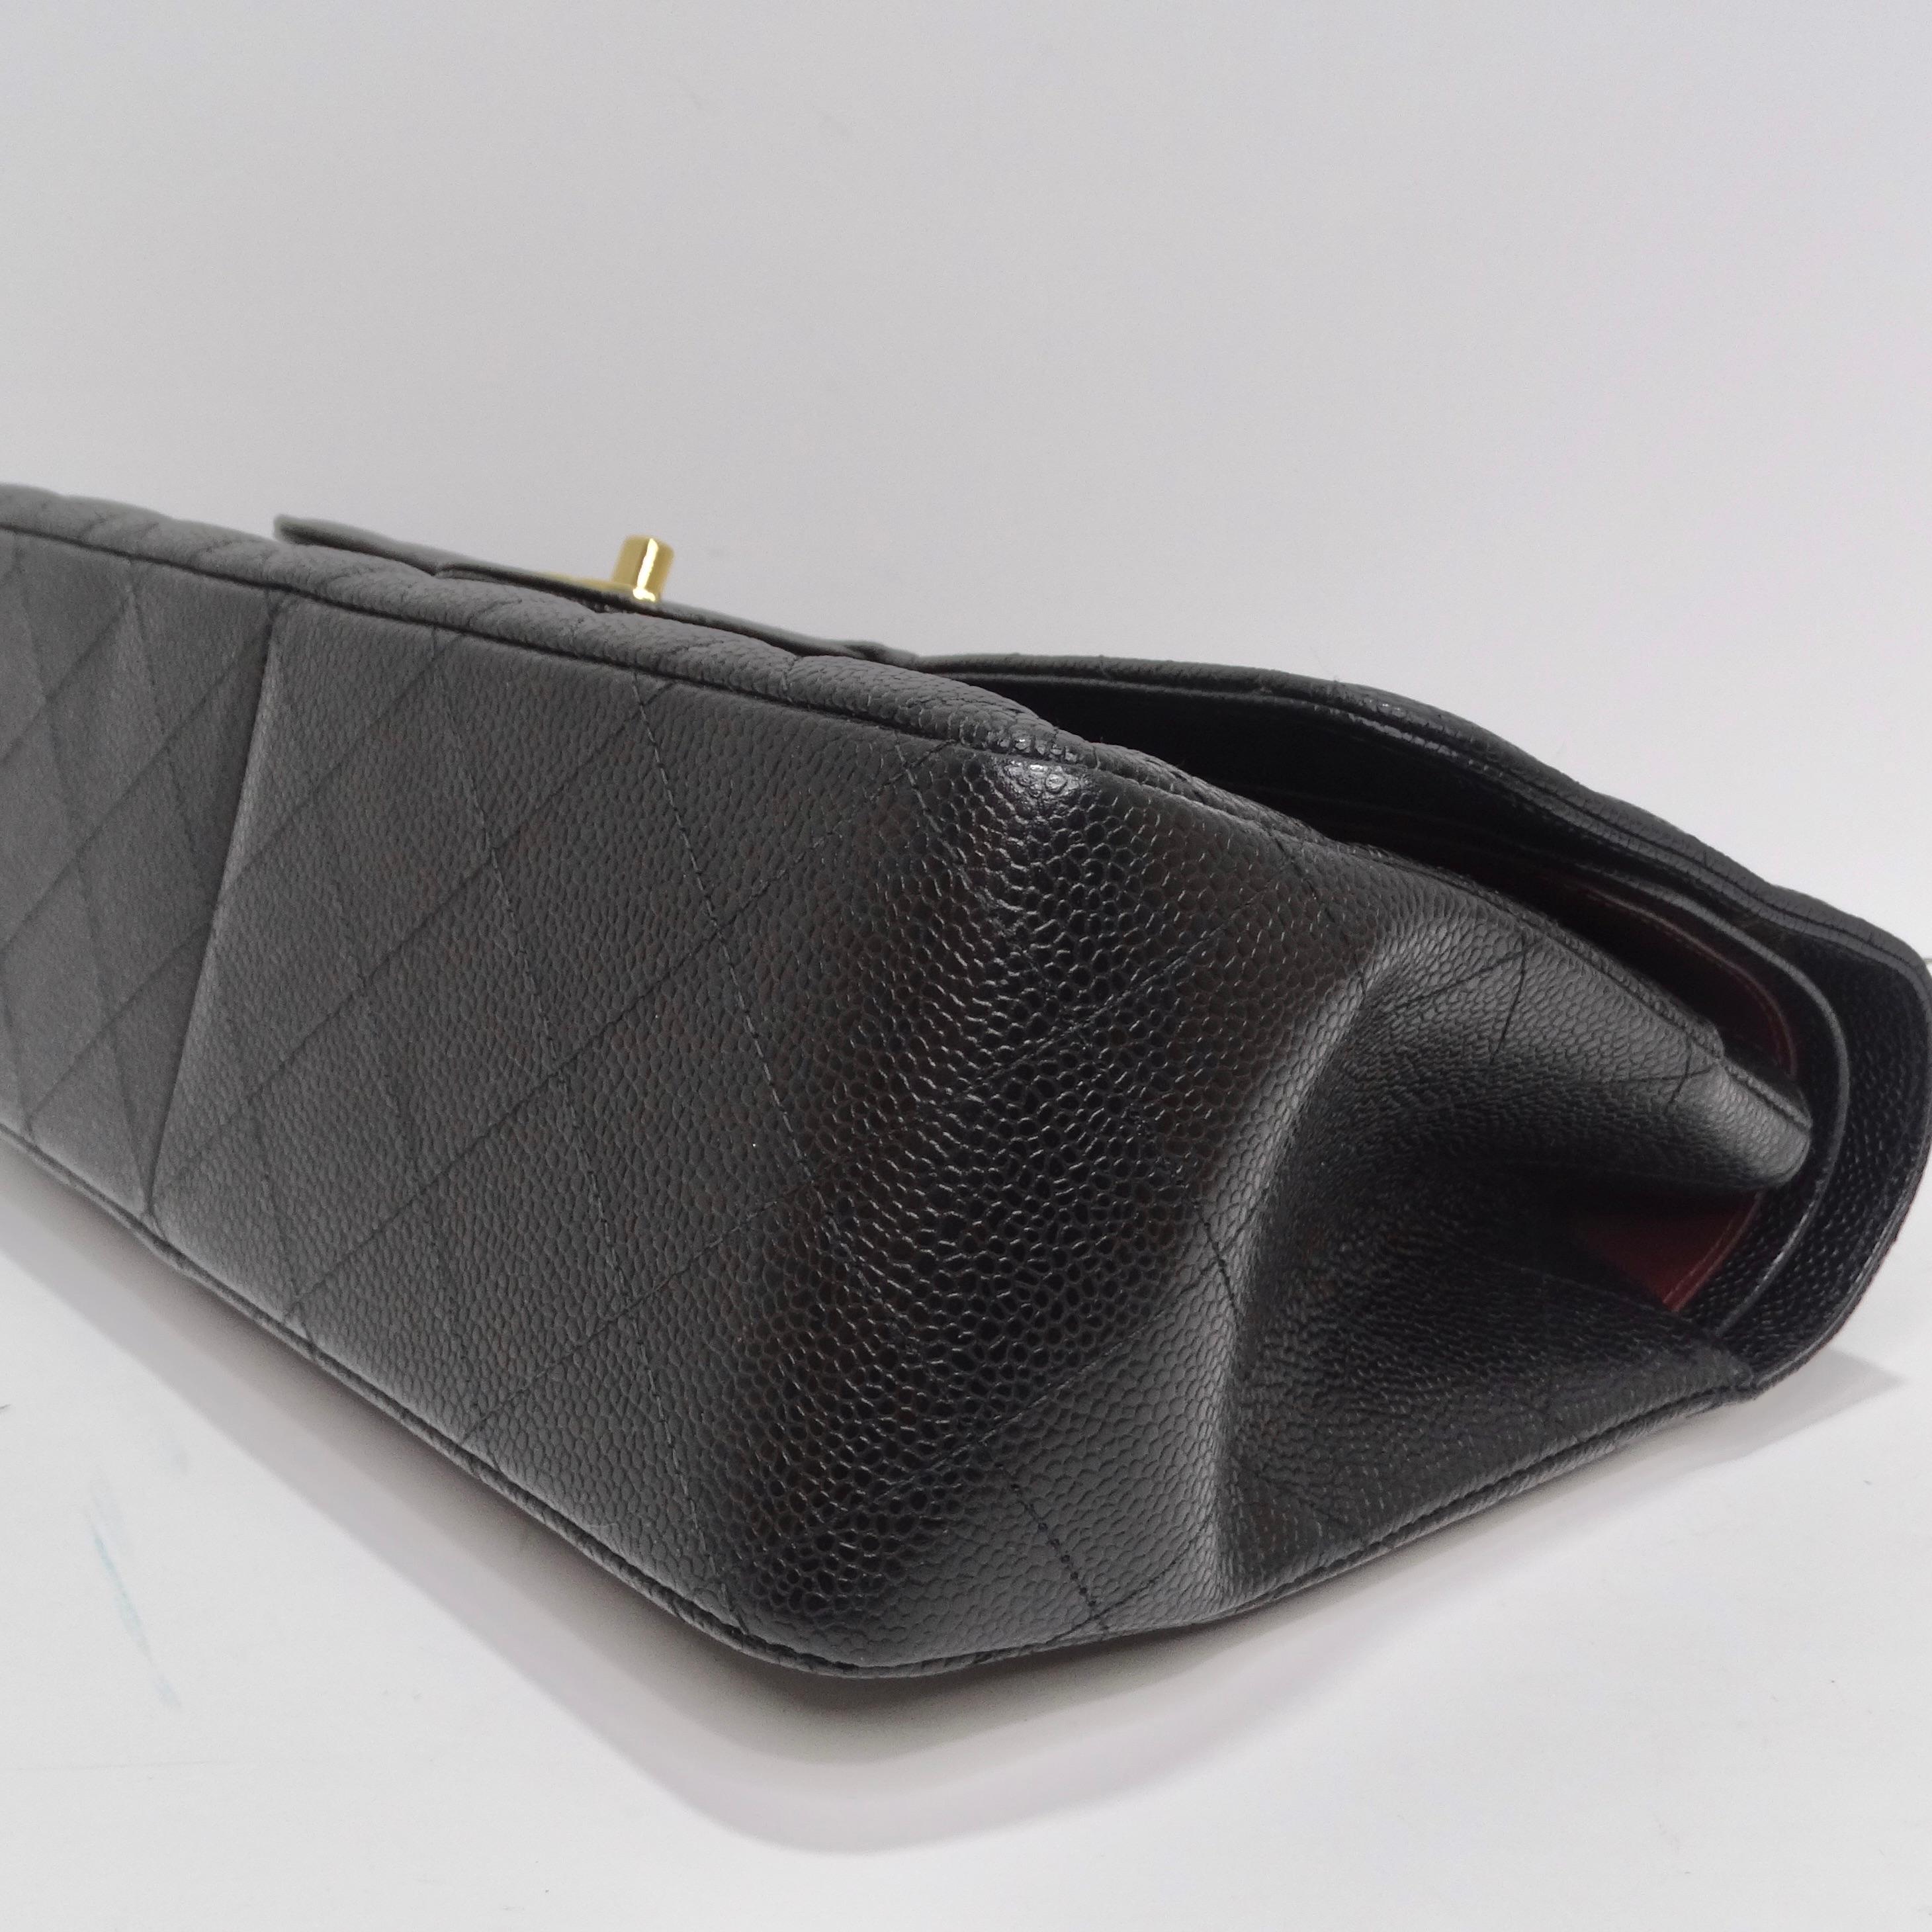 Chanel Large Classic Quilted Caviar Handbag Black/Burgundy 5